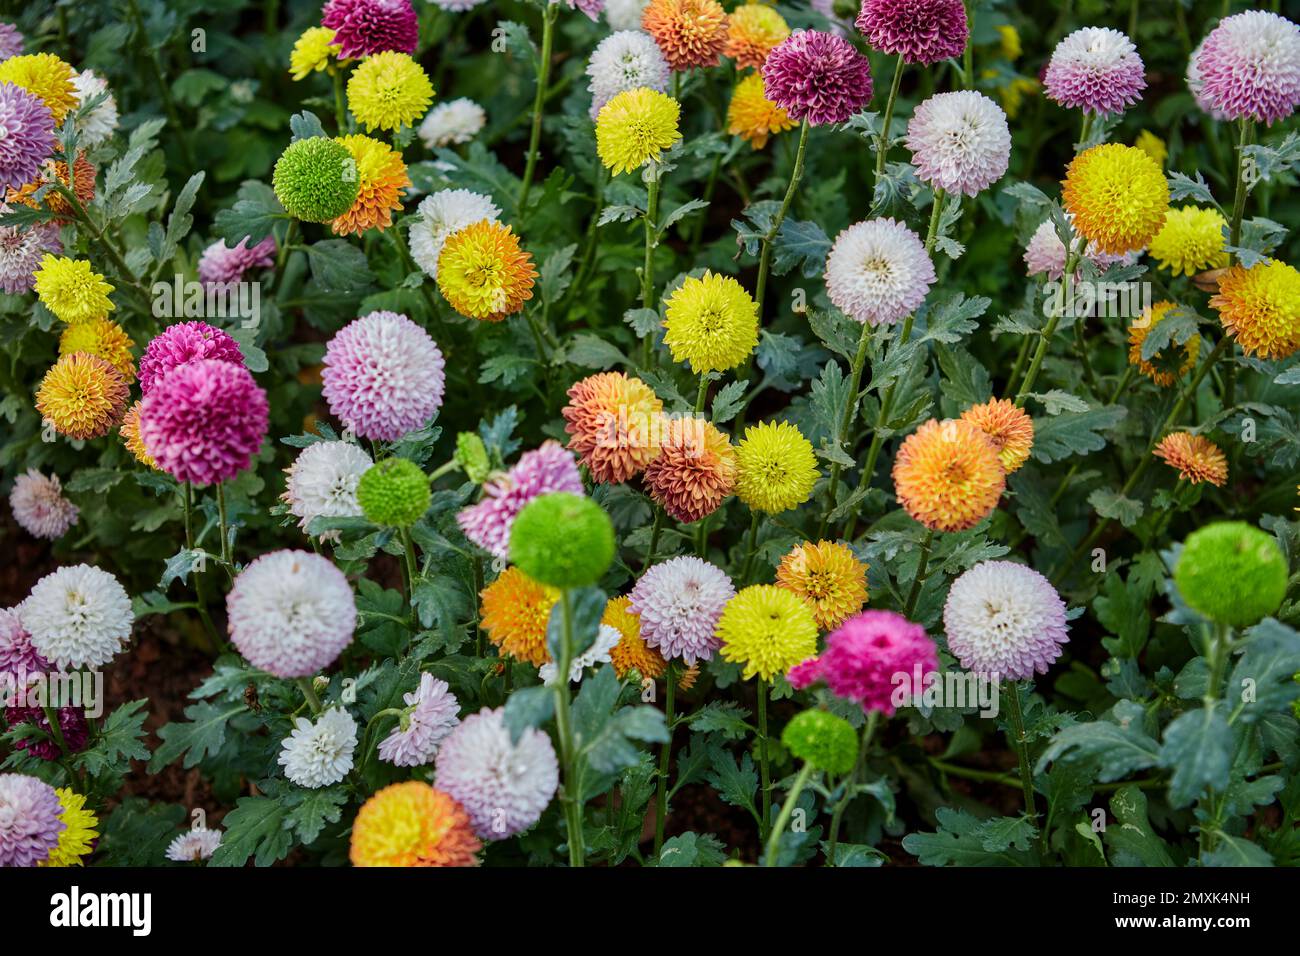 Multicolored Chrysanthemum or pom pom flower blossom in the garden Stock Photo